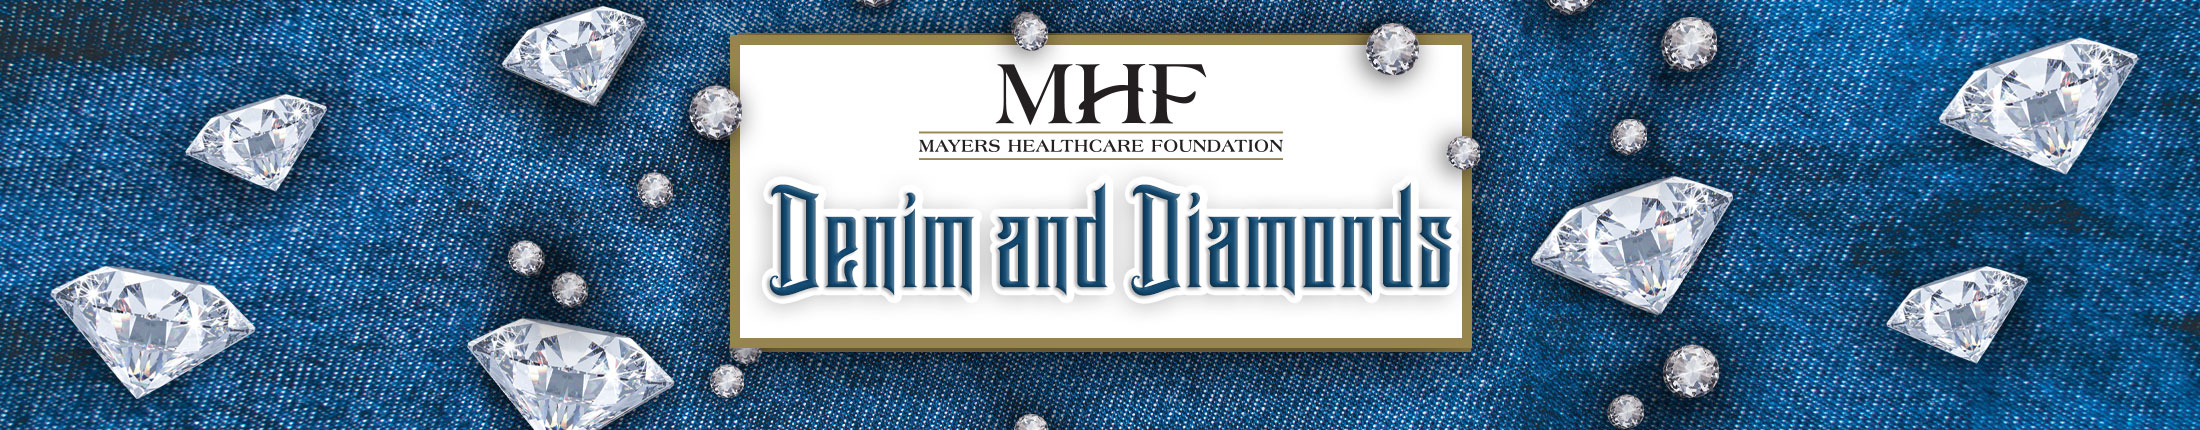 MHF
MAYERS HEALTHCARE FOUNDATION
Denim and Diamonds